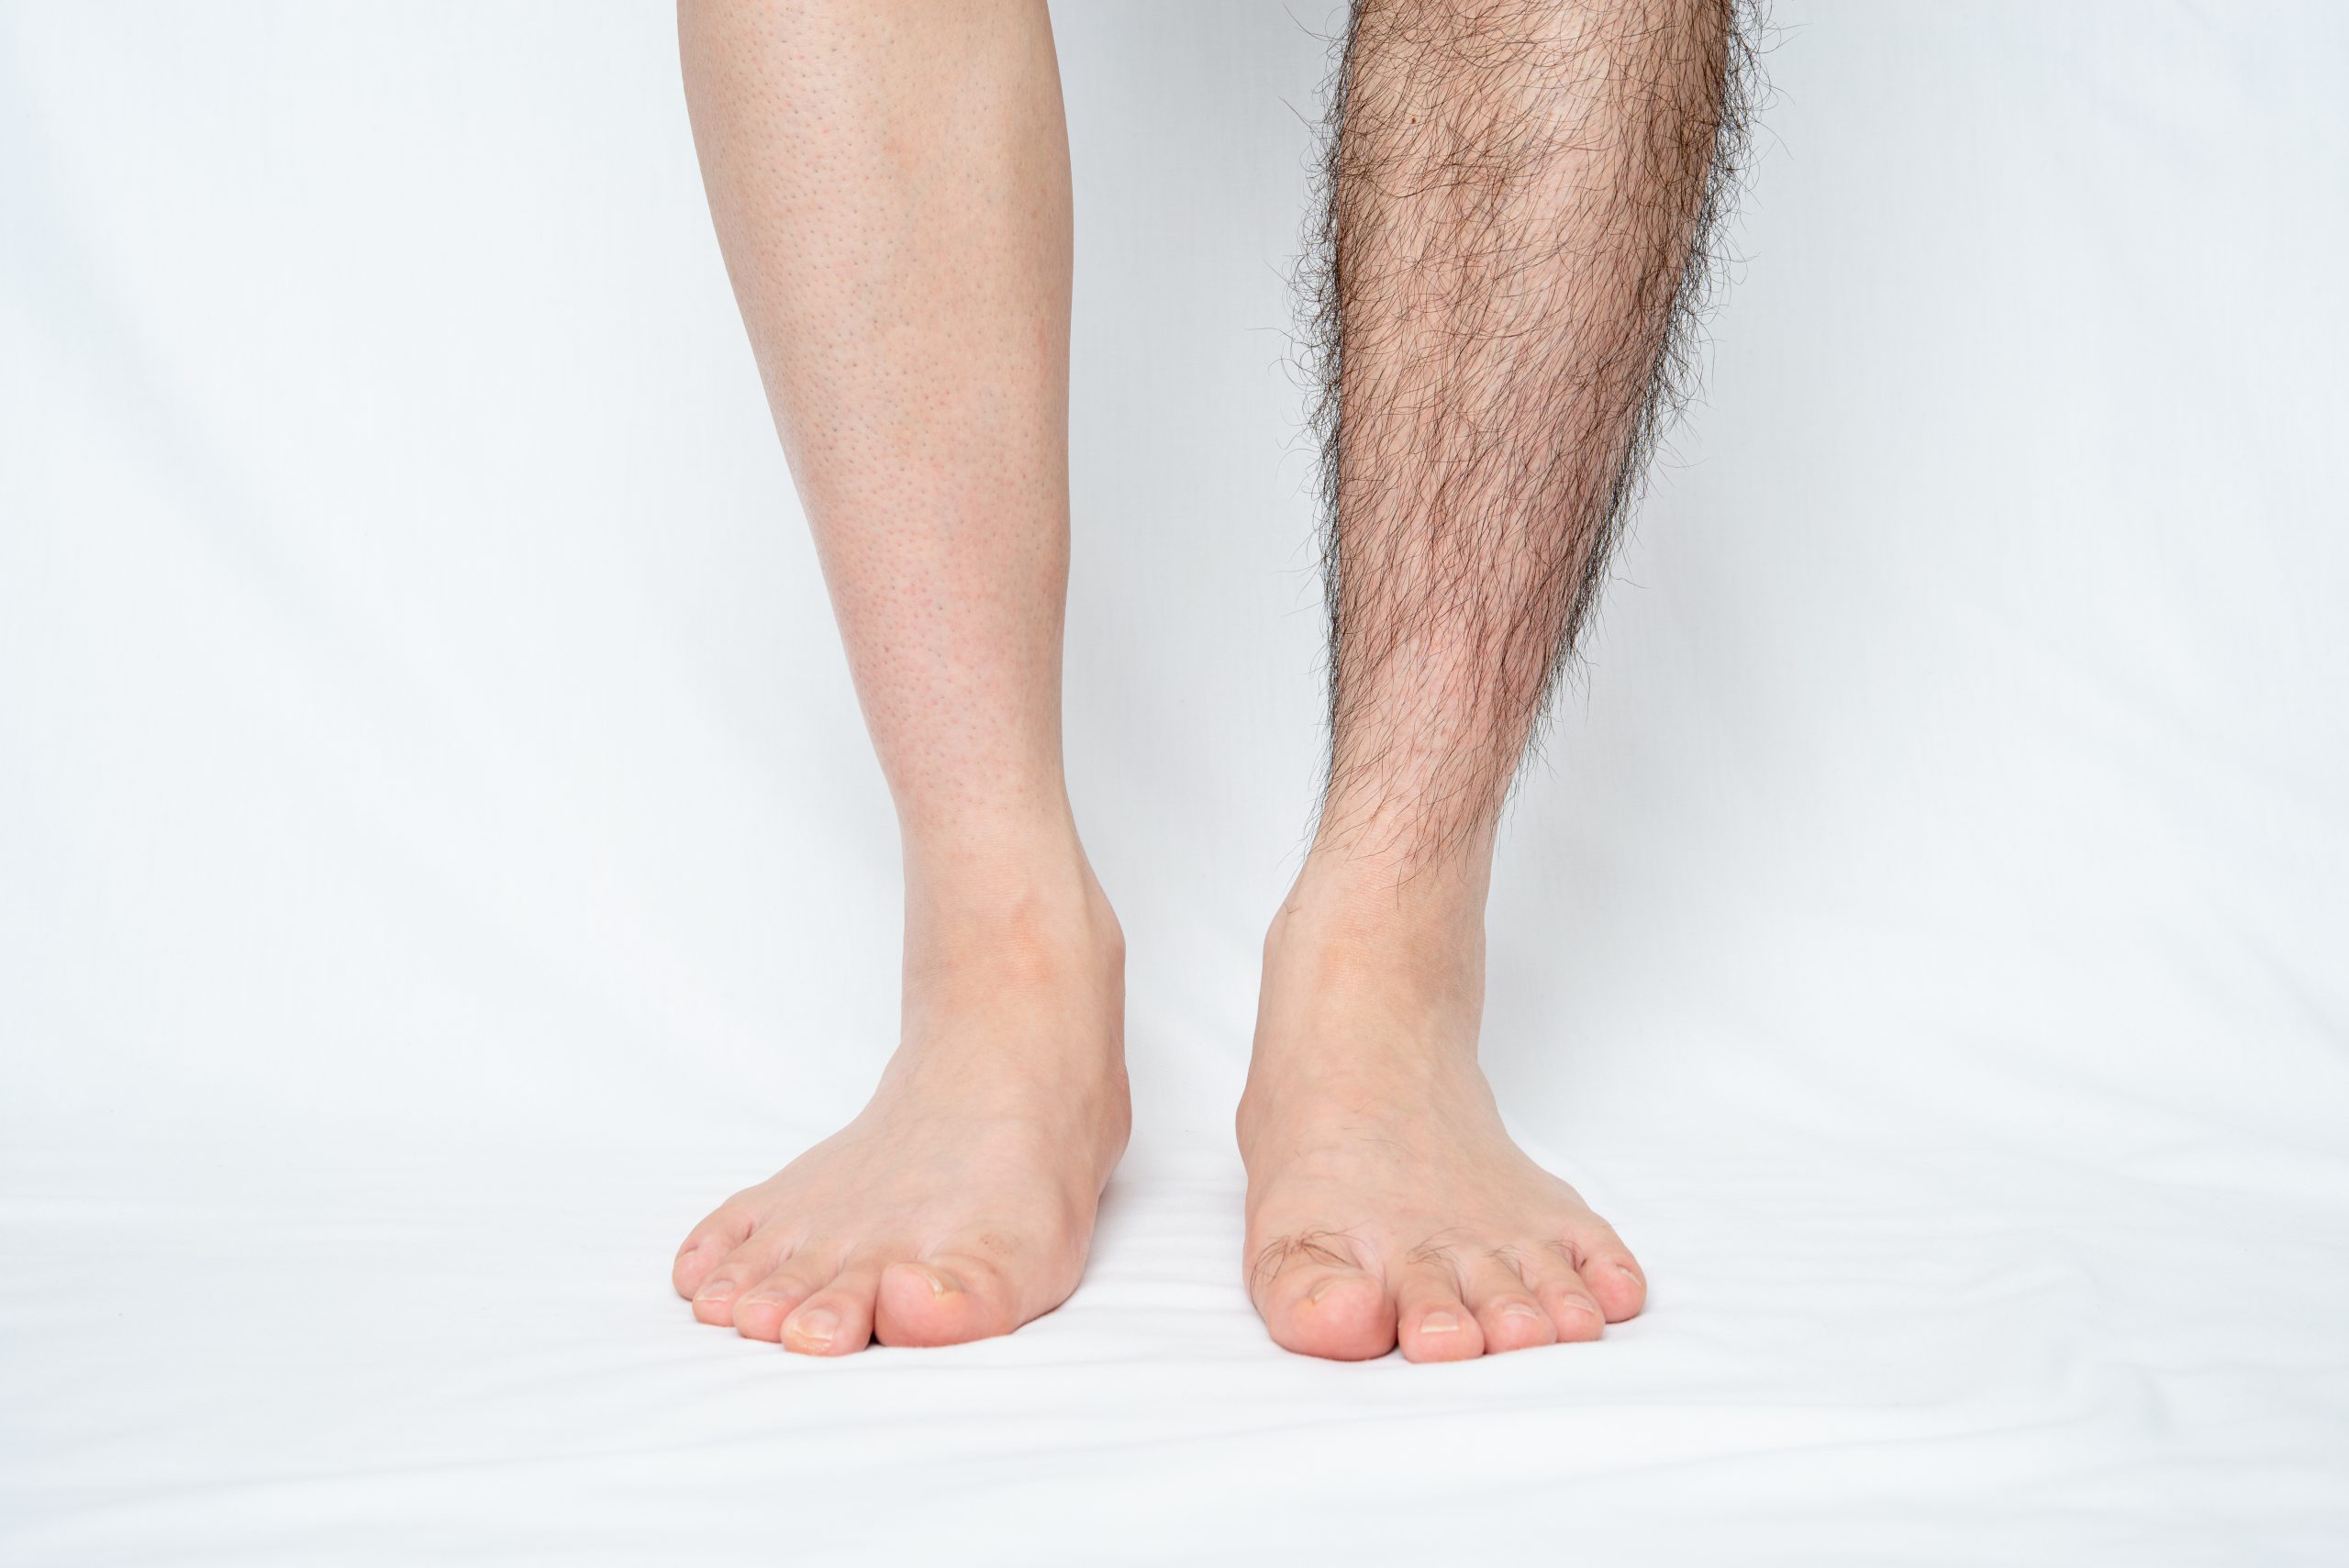 Laserontharing bij de huidtherapeut: Permanente ontharing van o.a. benen, armen, oksels, nek en bikinilijn